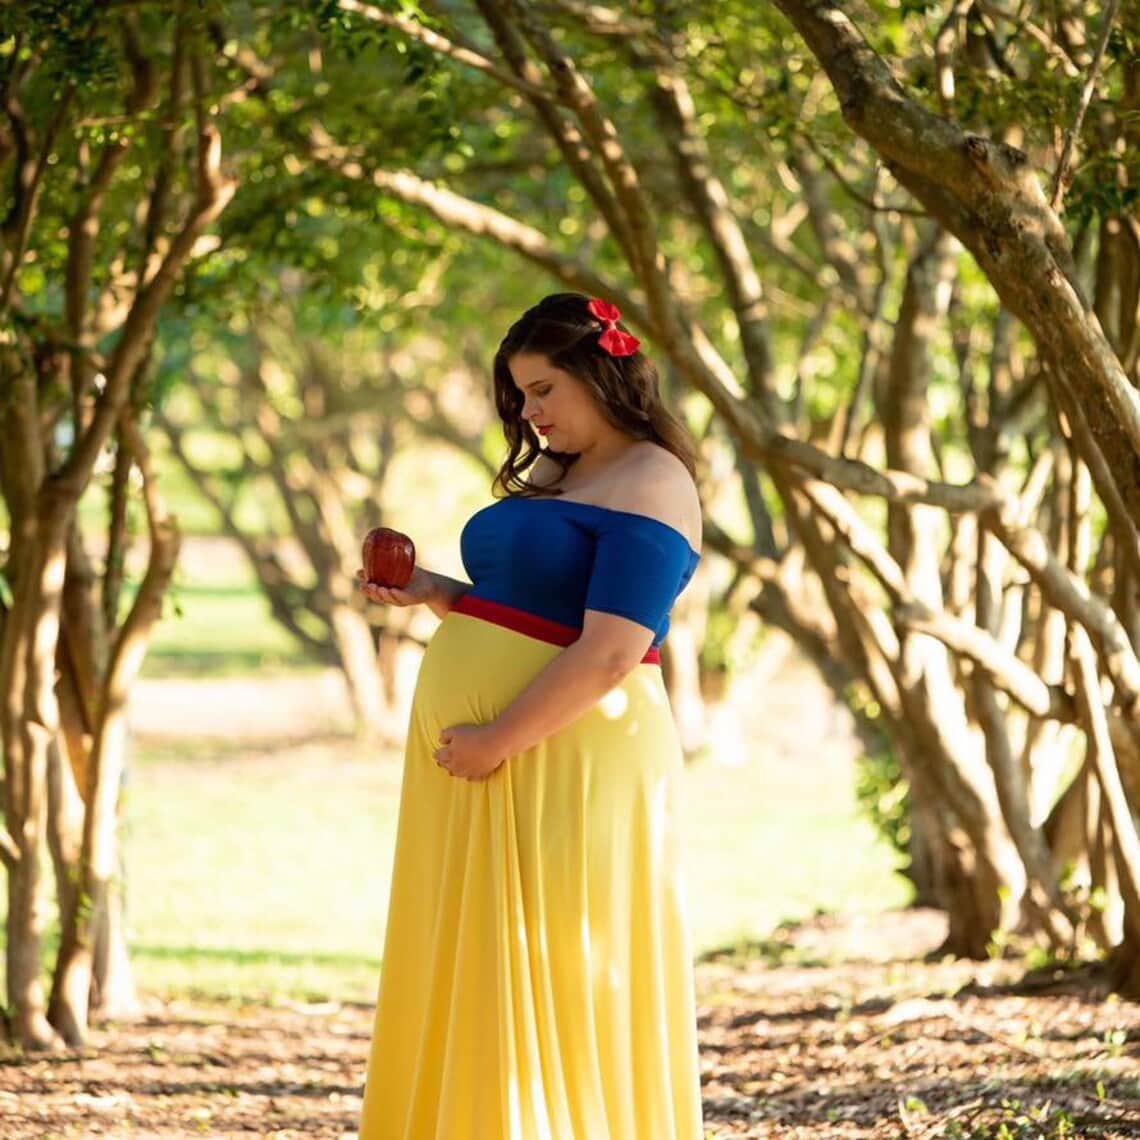 Snow White maternity dress